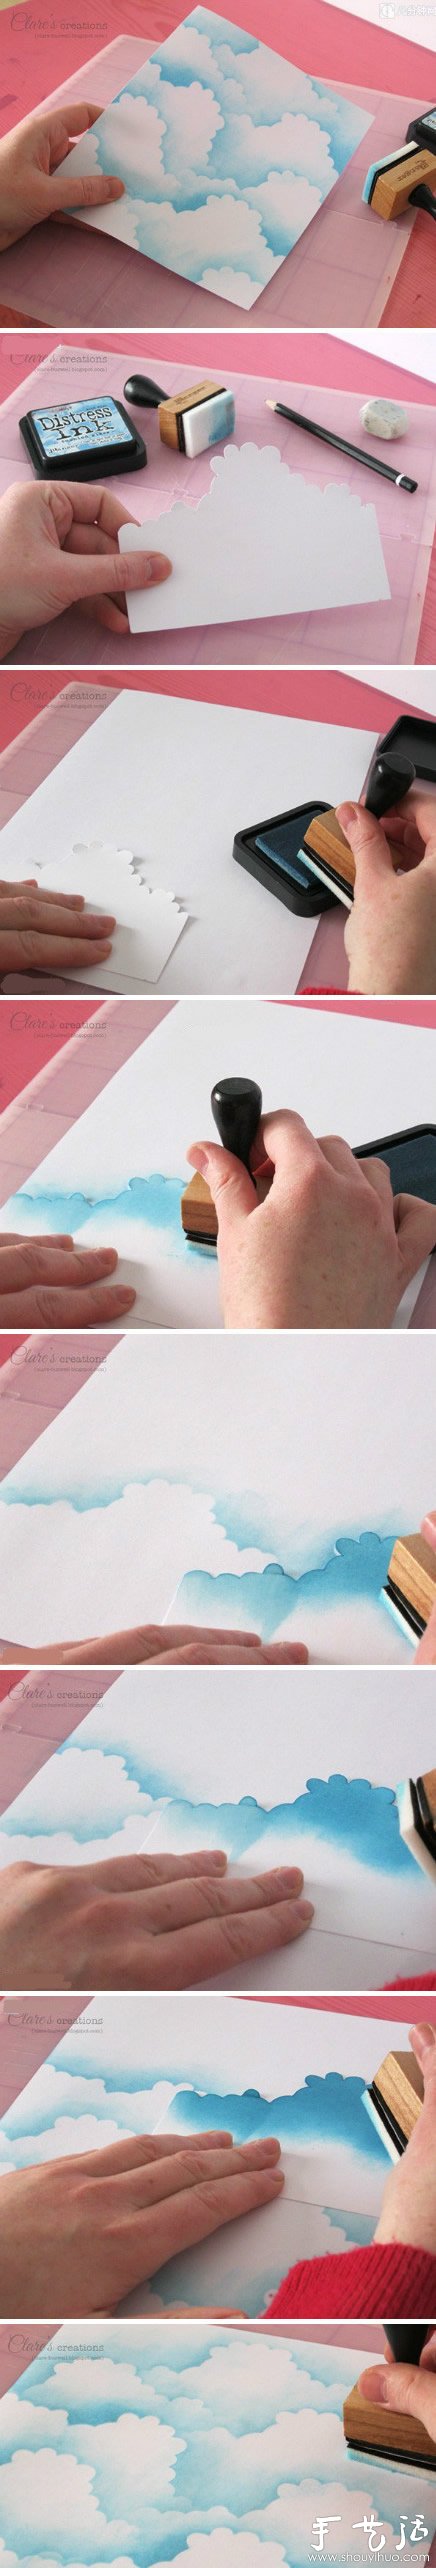 DIY制作漂亮的云朵印章卡片